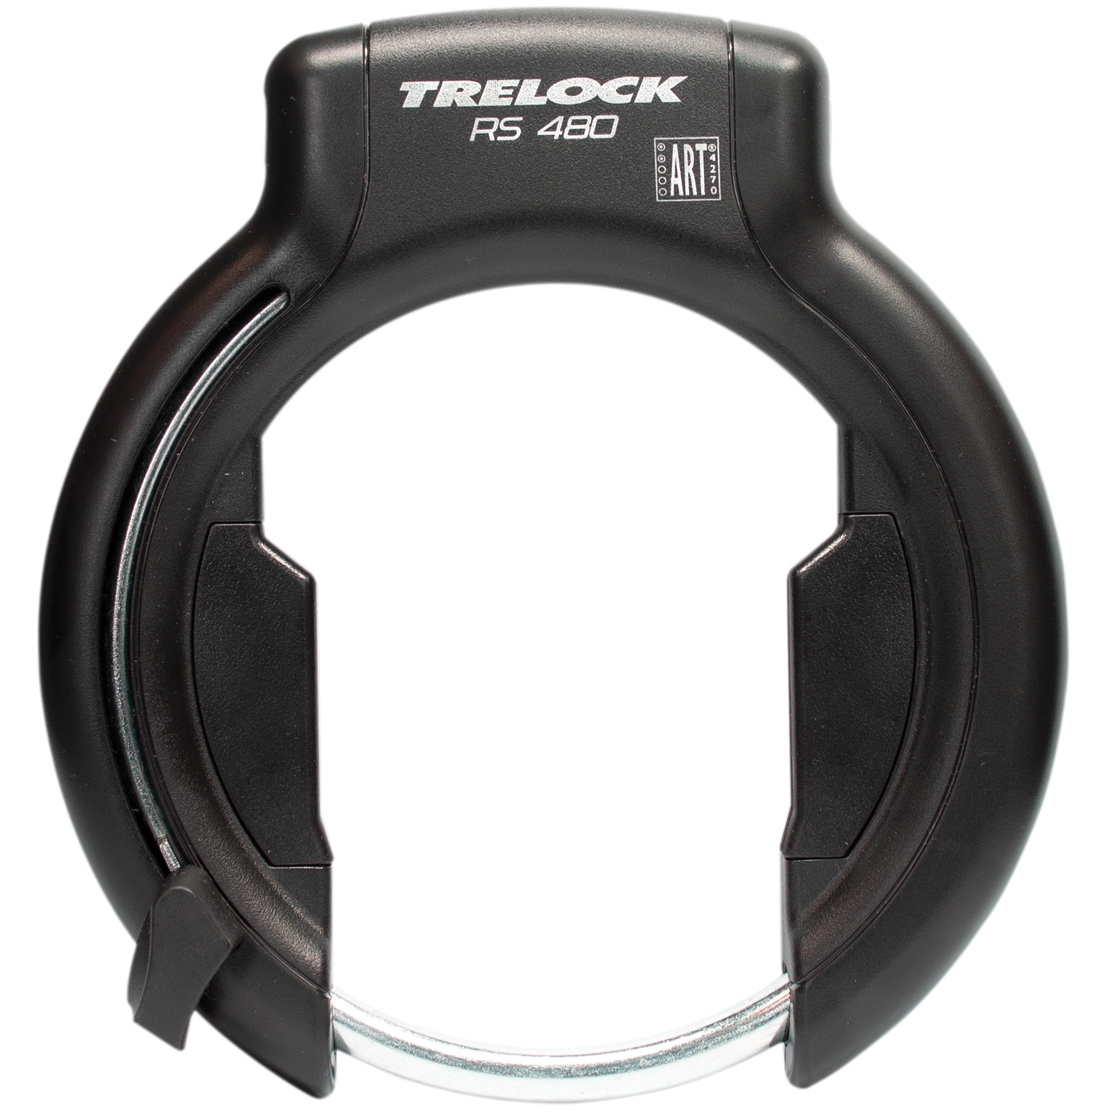 Productfoto van Trelock RS 480 P-O-C XL NAZ Frame Lock